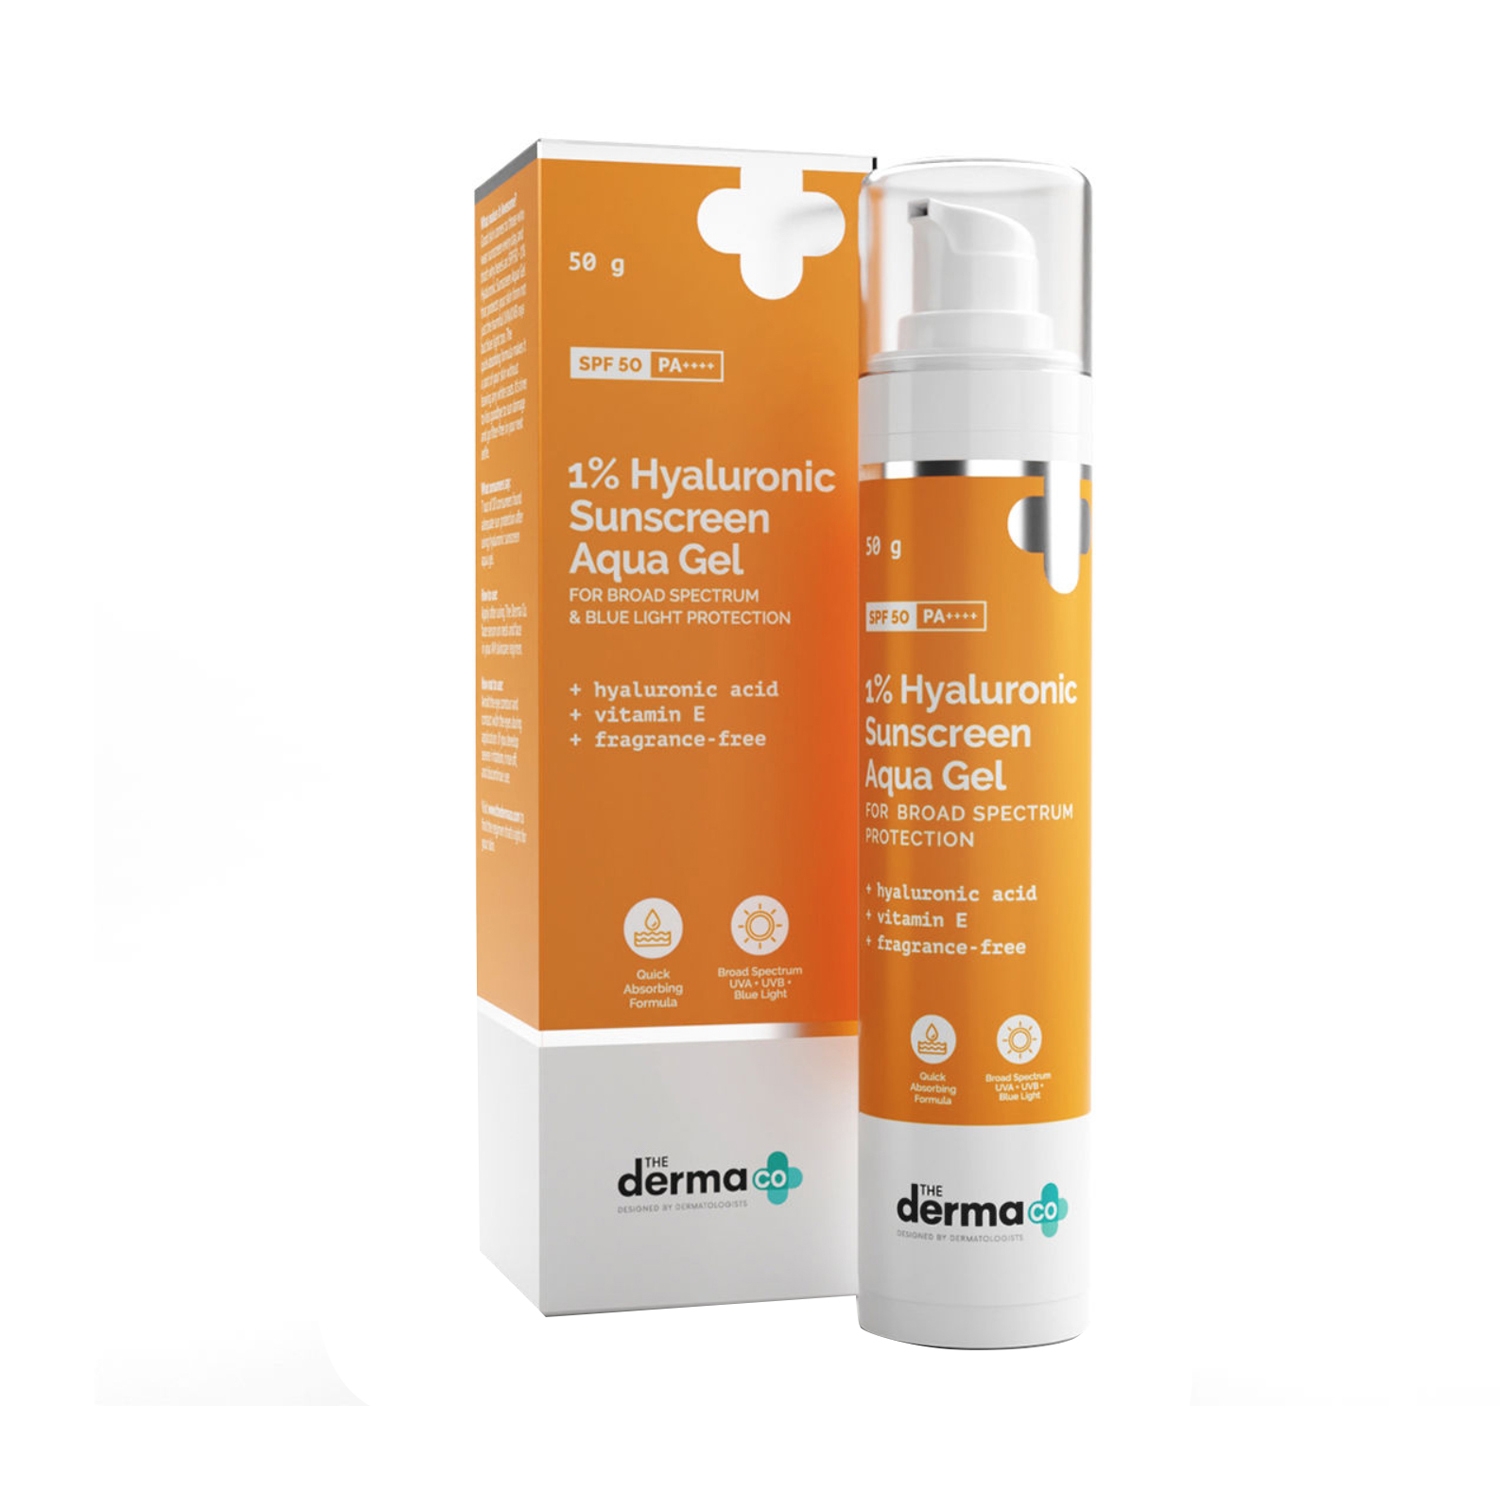 The Derma Co | The Derma Co 1% Hyaluronic Sunscreen Aqua Gel SPF 50 Pa++ (50g)